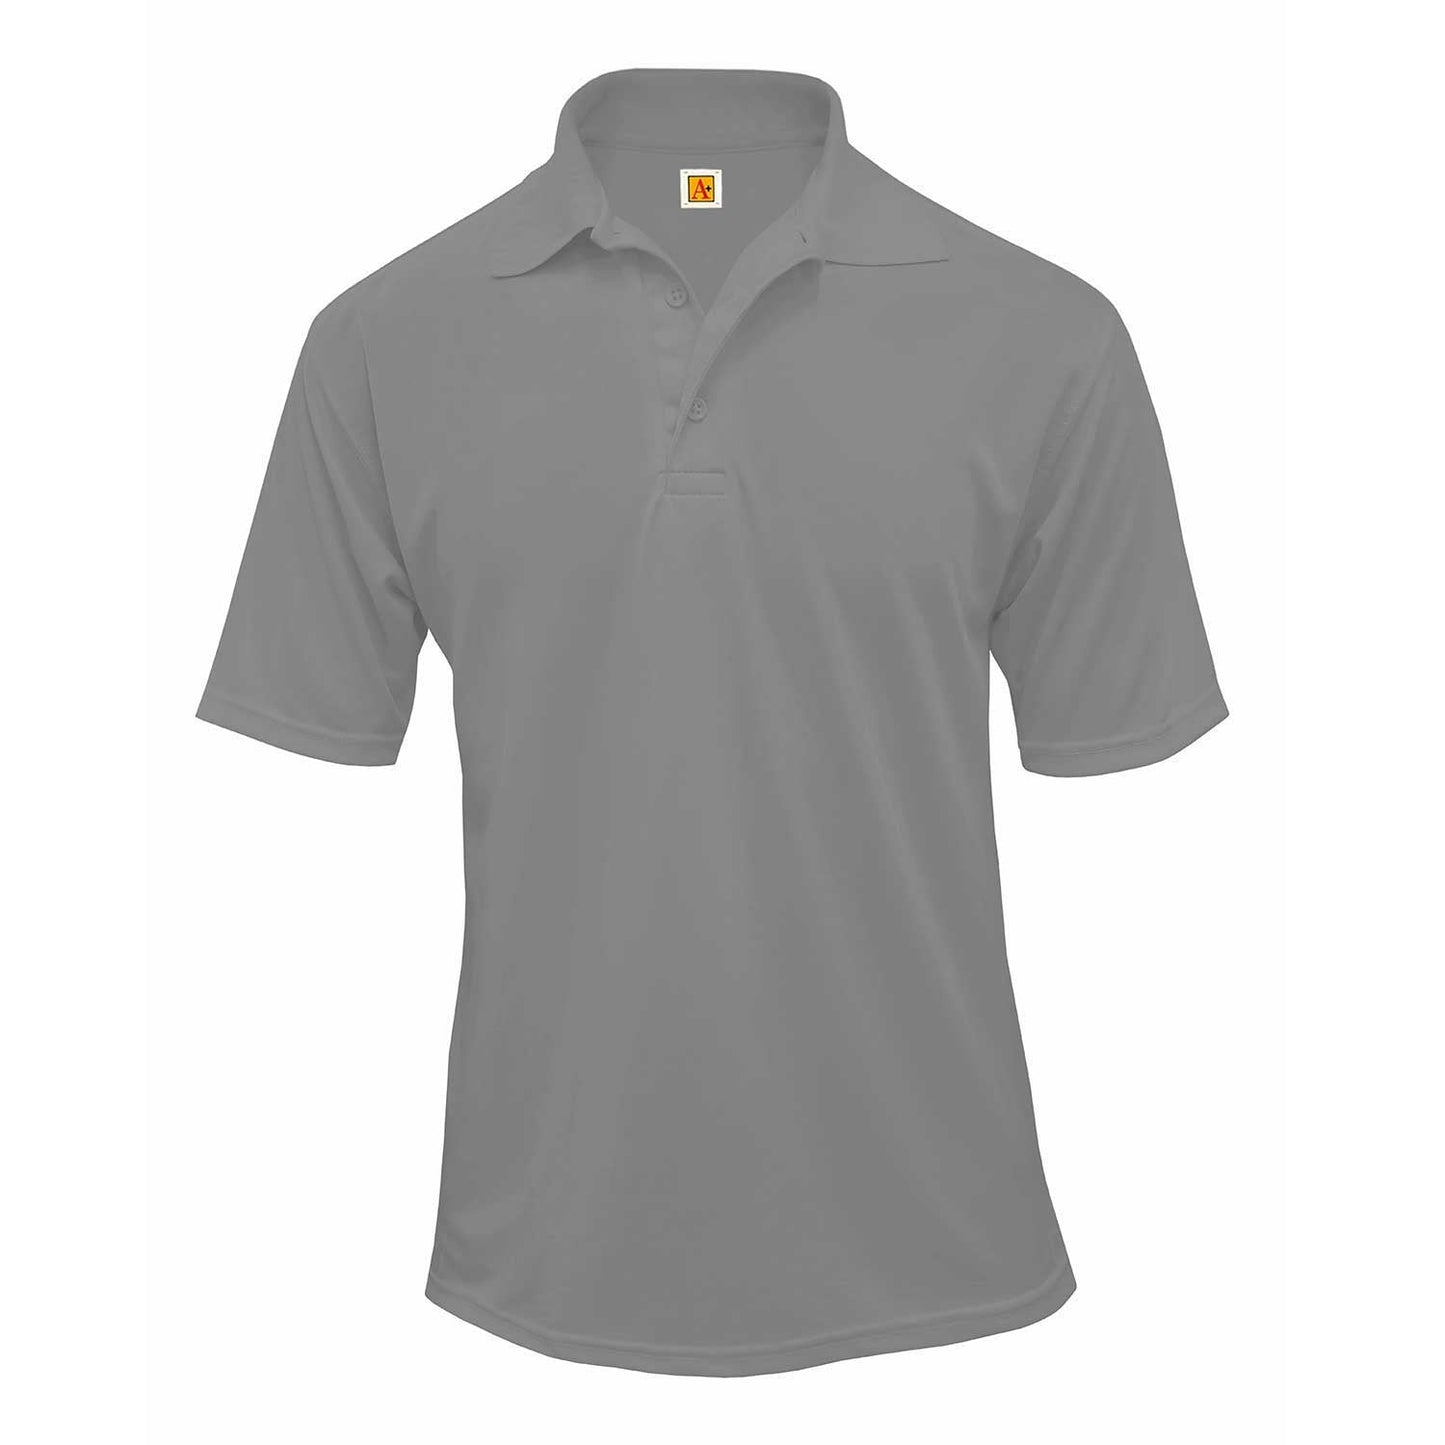 Performance Dri-fit Jersey Knit Short Sleeve Shirt (Unisex) w/Logo - 1103